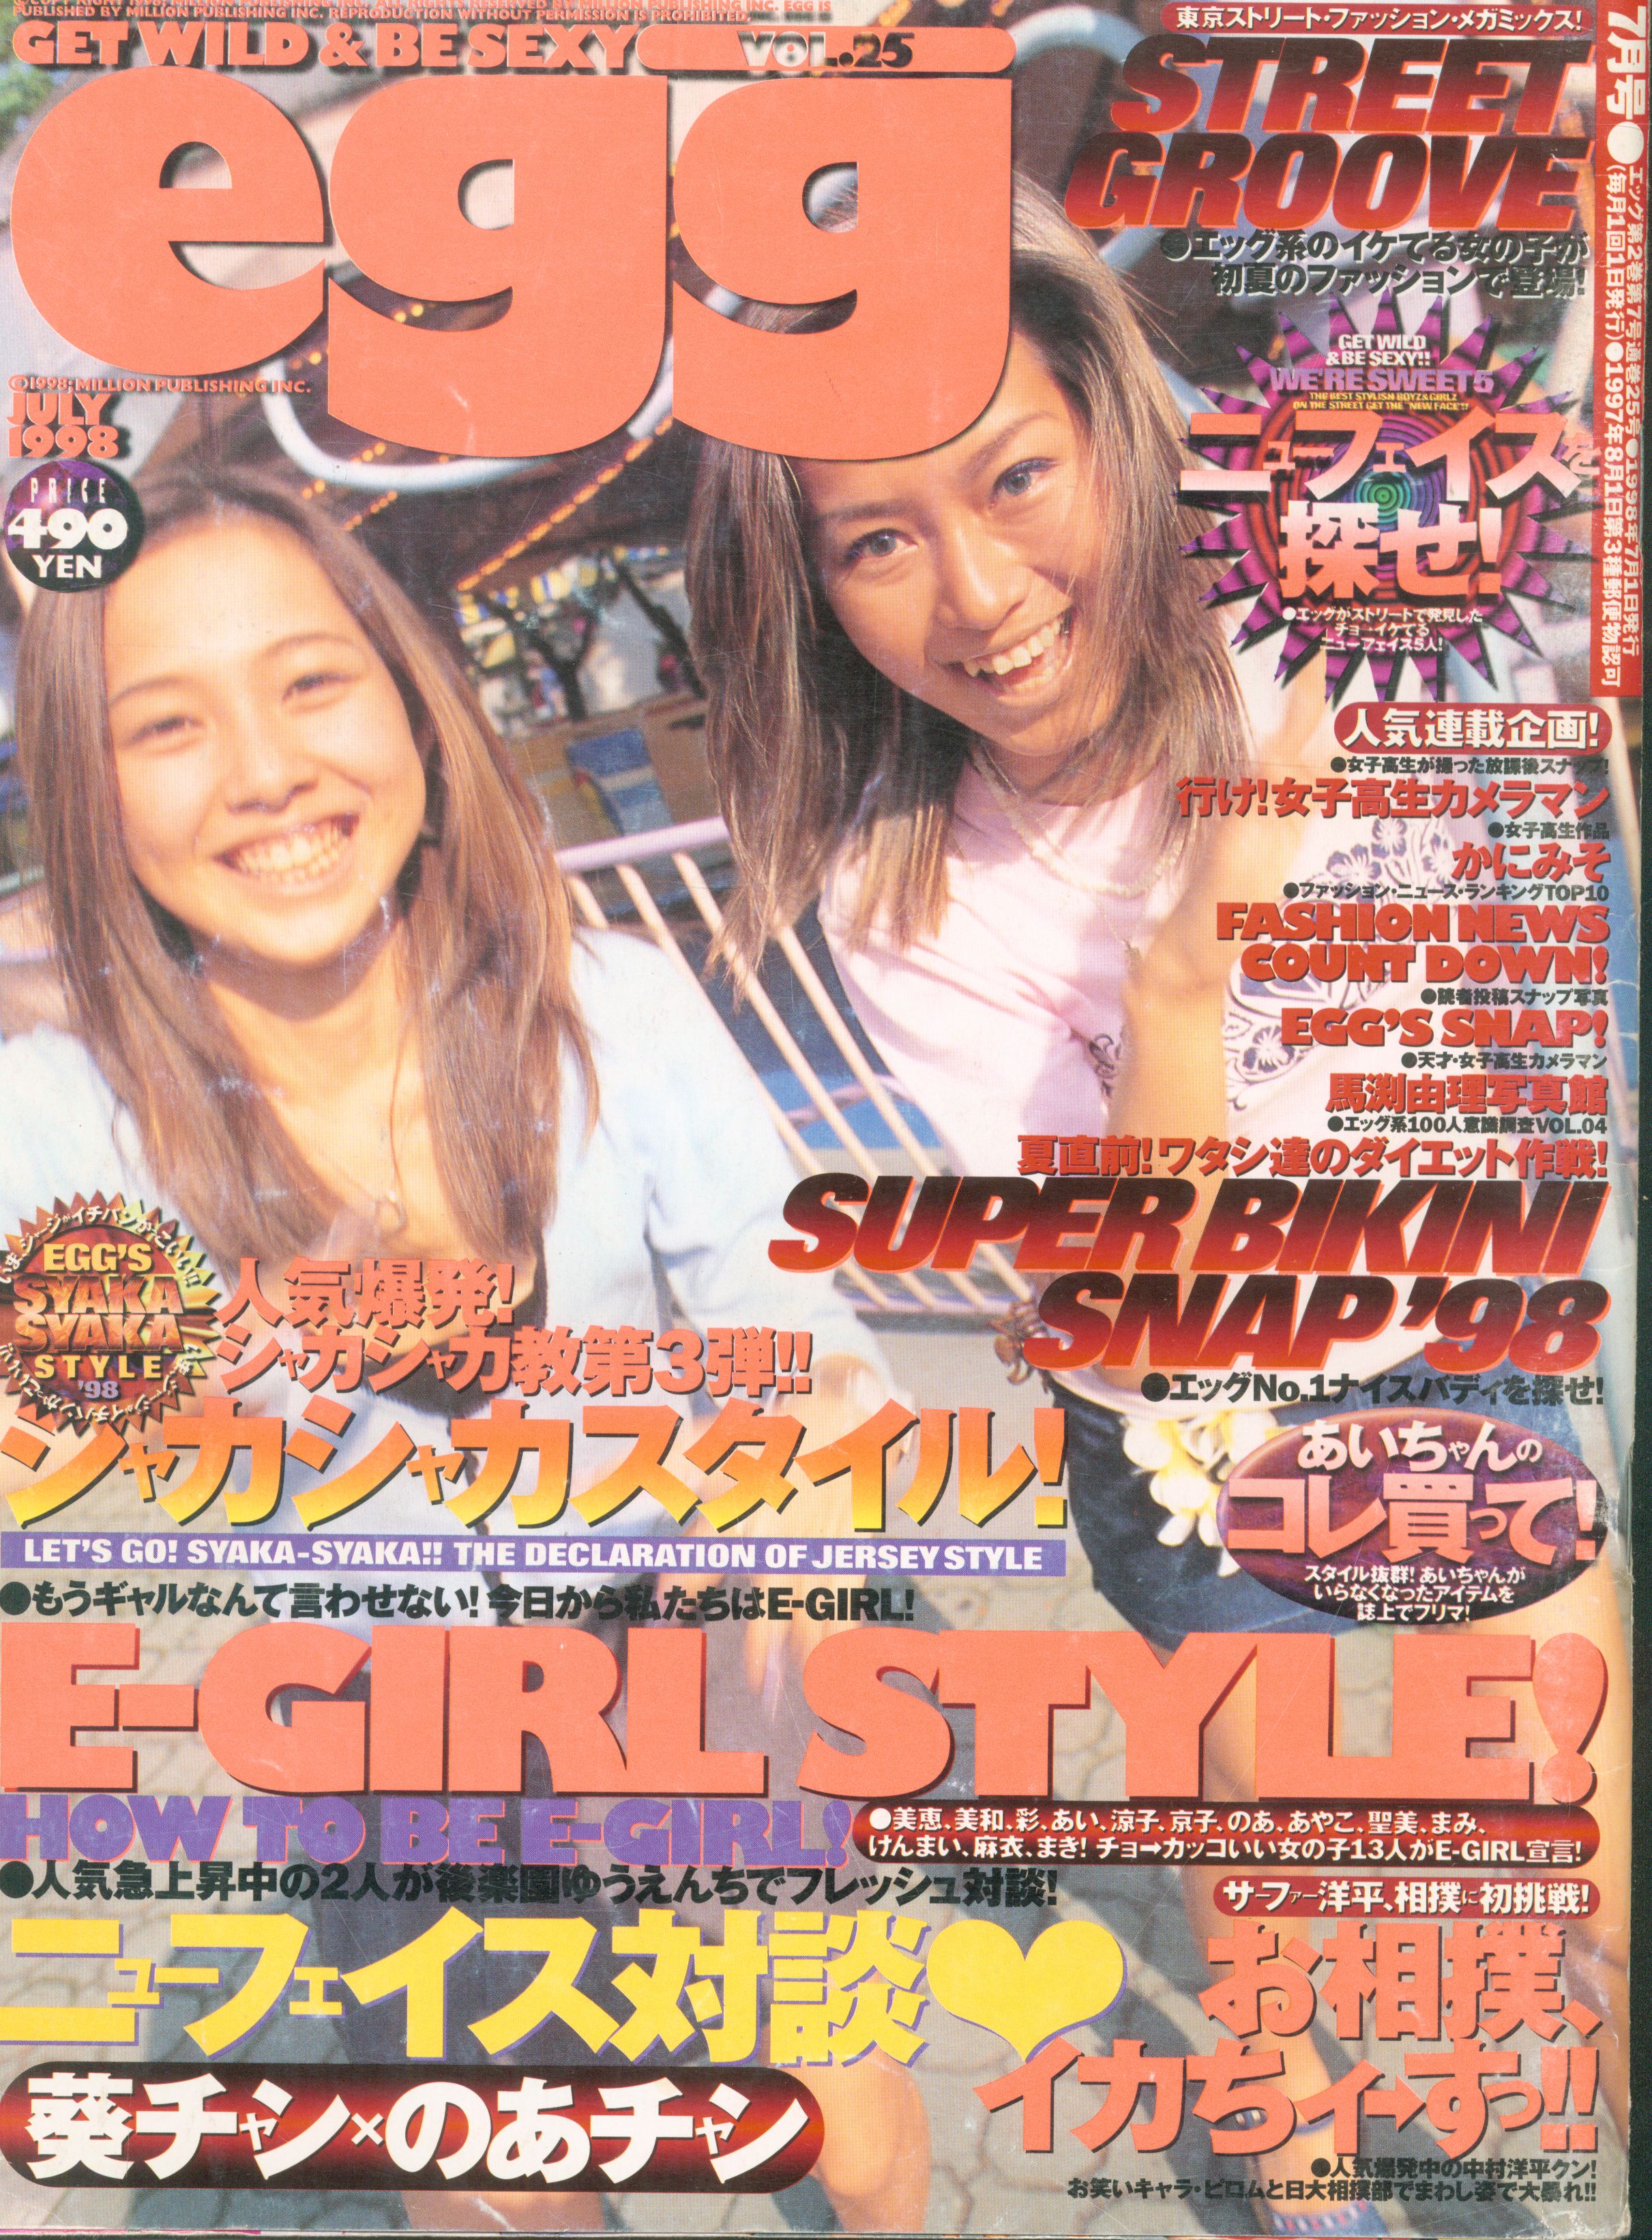 egg 雑誌 ギャル コギャル 1998 1999 ガングロ - ファッション